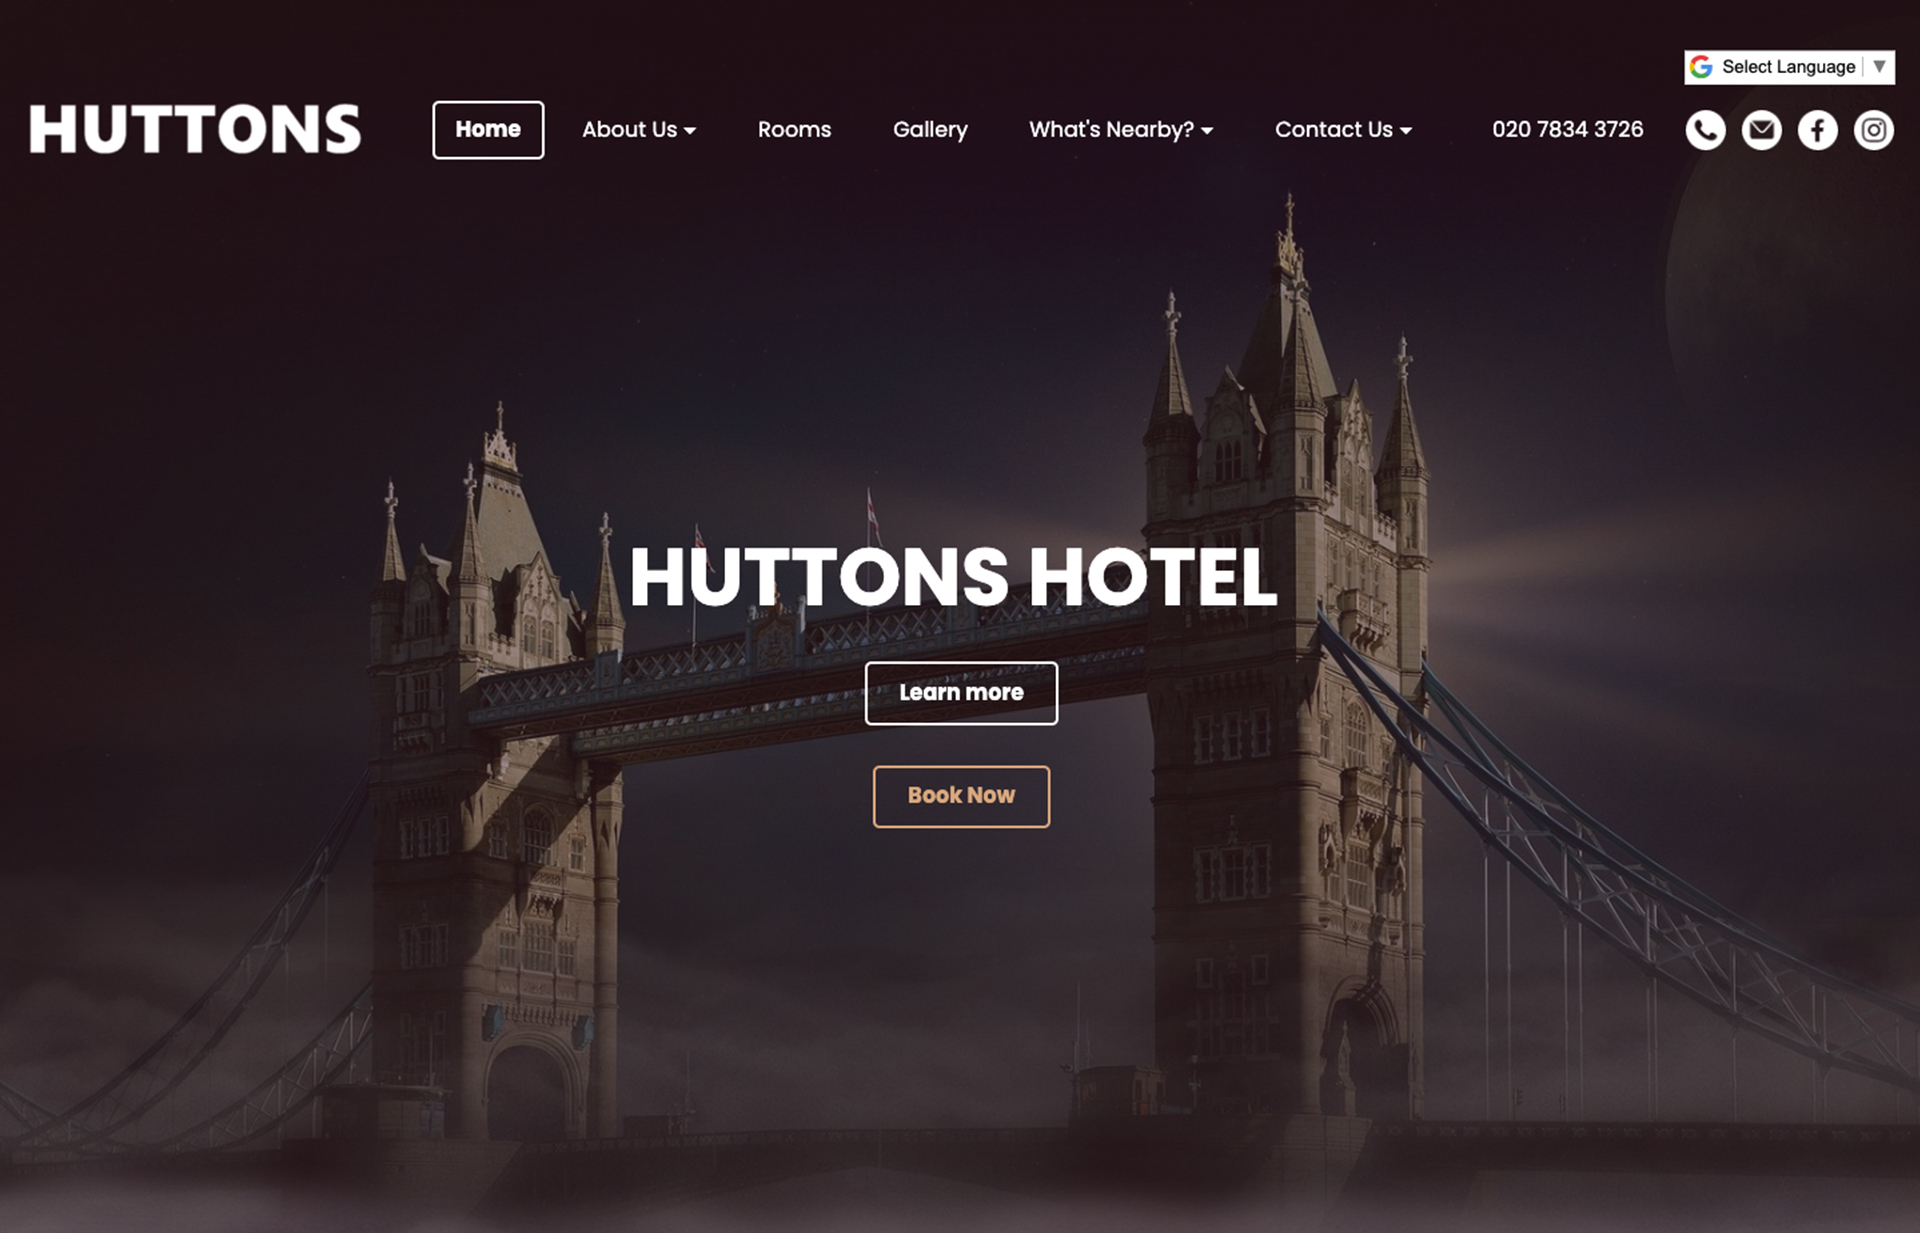 Huttons Hotel website design